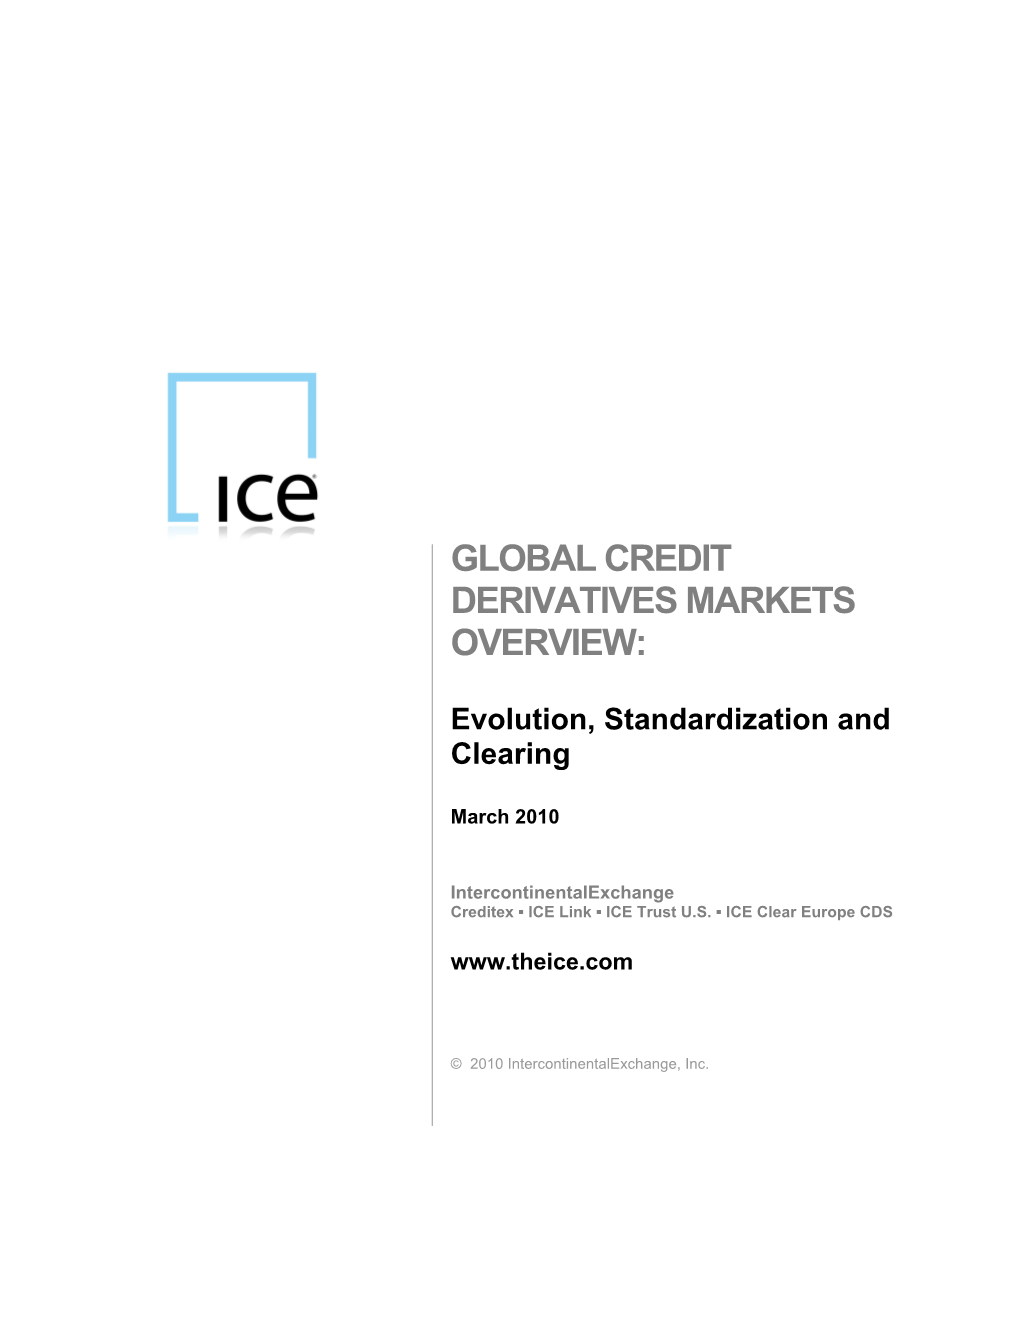 Global Credit Derivatives Markets Overview